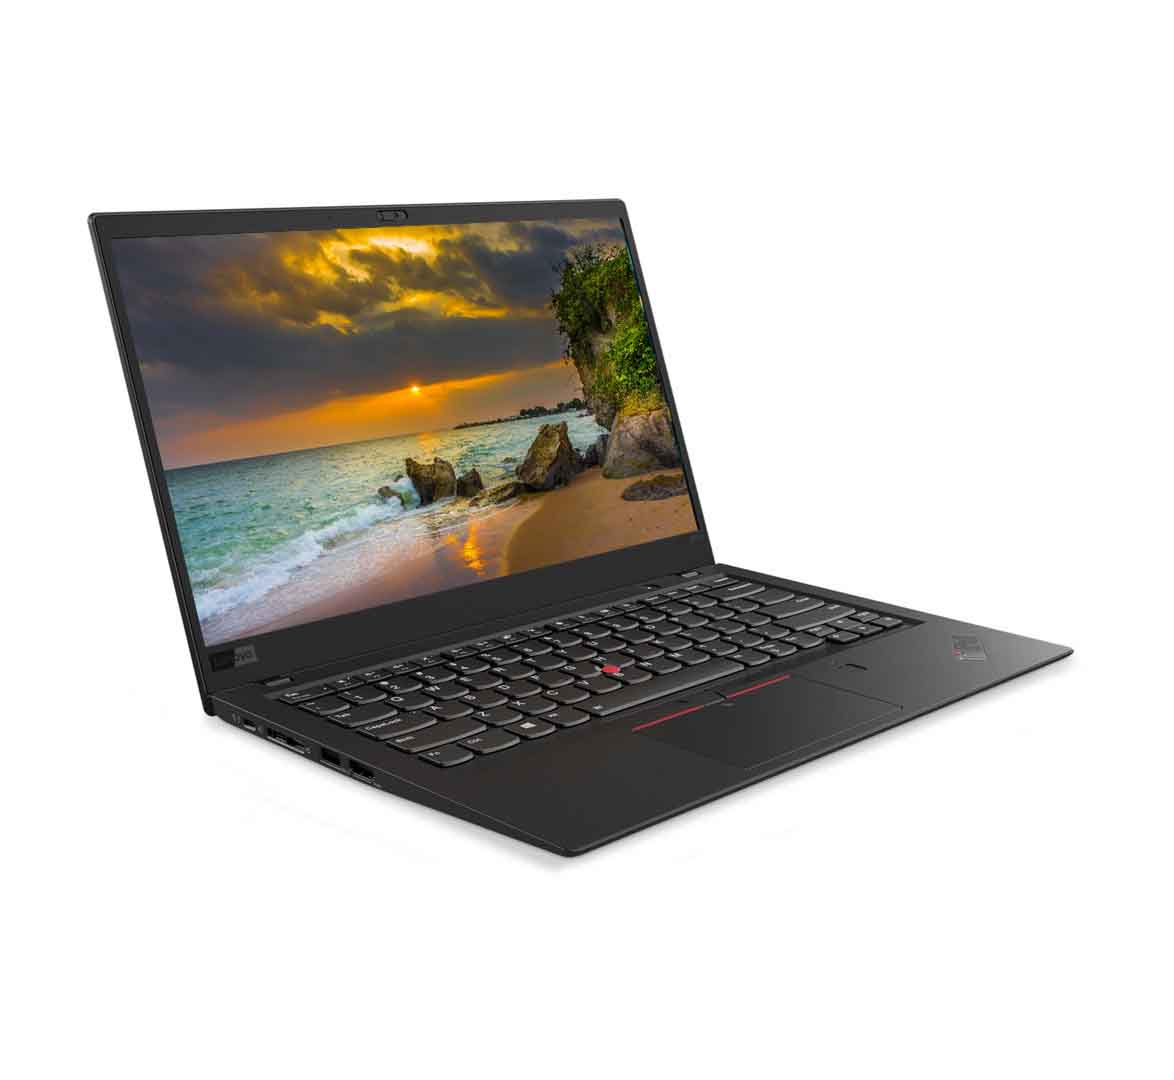 Lenovo ThinkPad X1 Extreme, Intel Core i7-8th Gen, 16GB RAM, 512GB SSD, NVIDIA GEFORCE GTX 1050 4GB, 15 inch Touch, Win 10, Refurbished Laptop